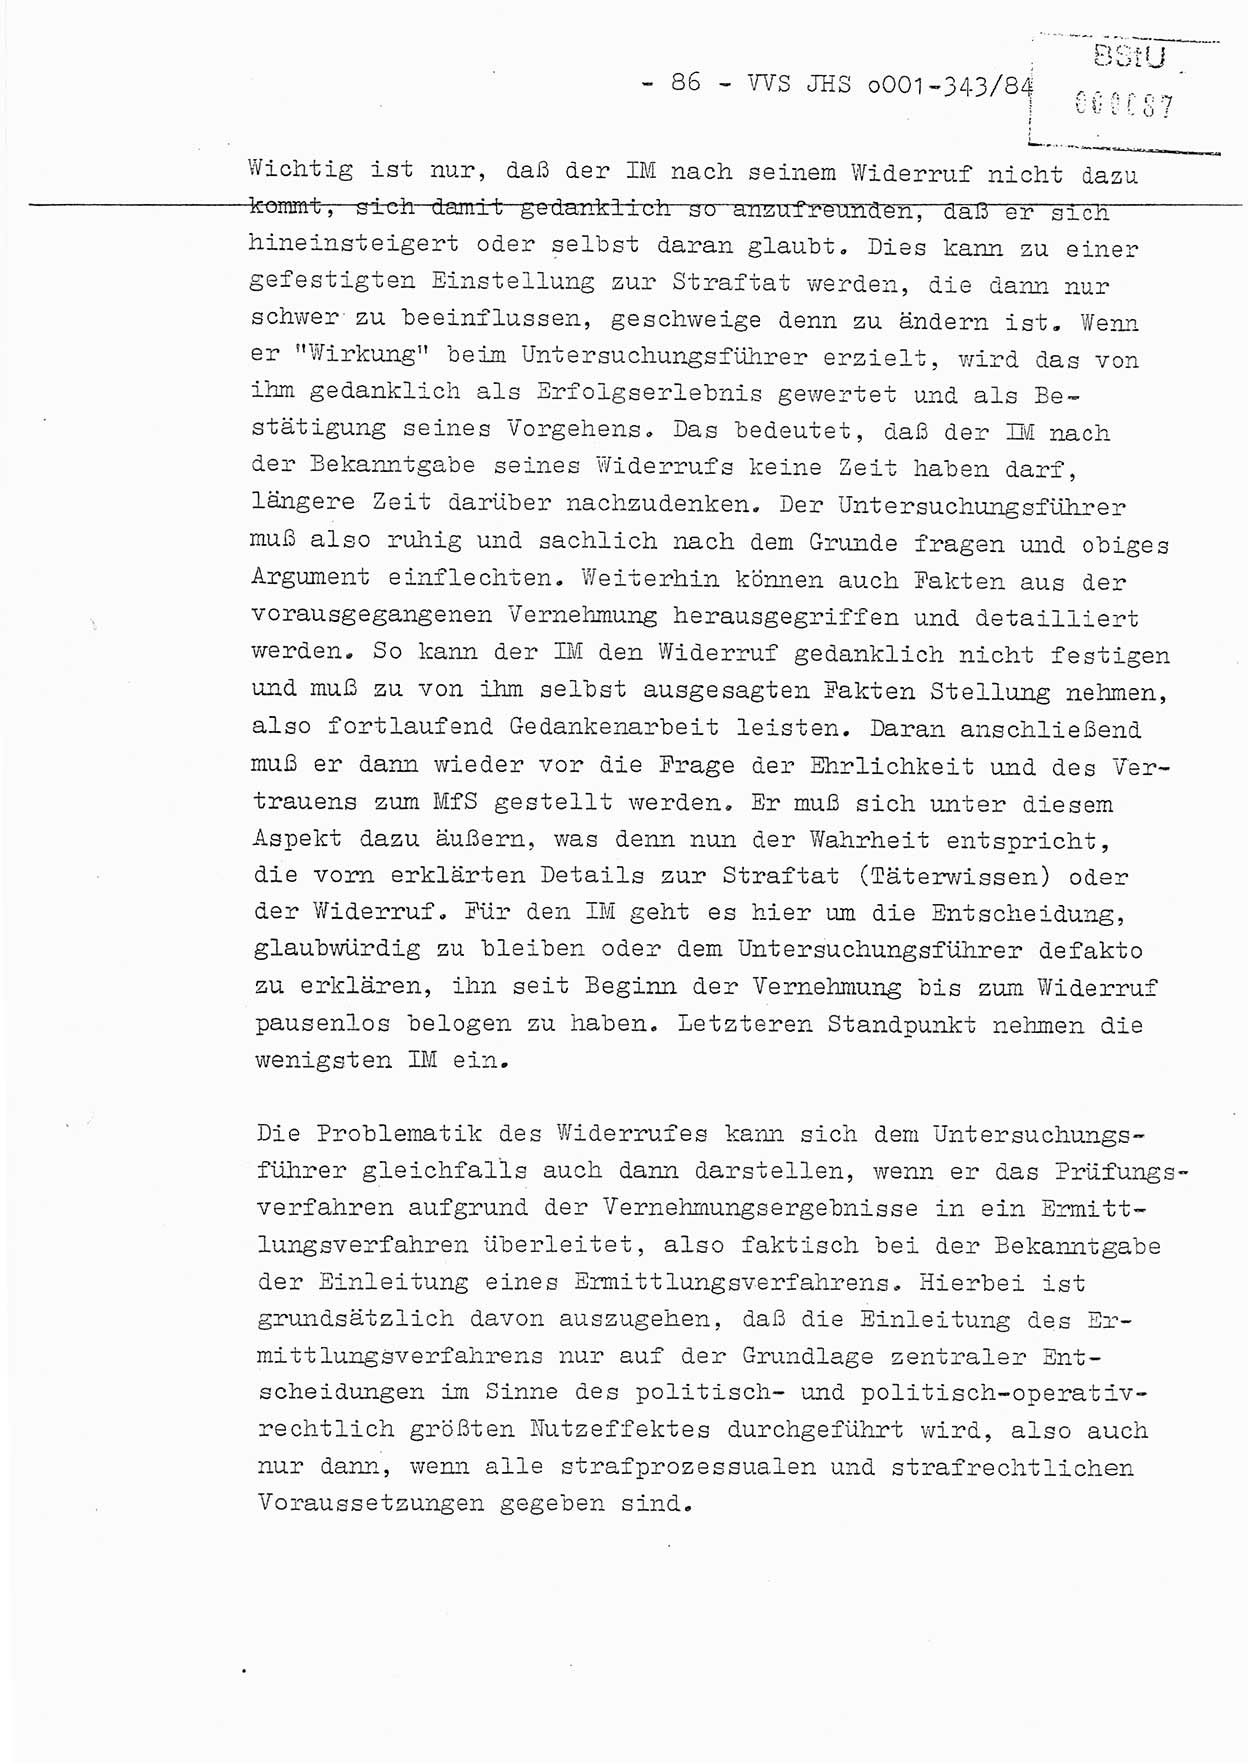 Diplomarbeit, Oberleutnant Bernd Michael (HA Ⅸ/5), Oberleutnant Peter Felber (HA IX/5), Ministerium für Staatssicherheit (MfS) [Deutsche Demokratische Republik (DDR)], Juristische Hochschule (JHS), Vertrauliche Verschlußsache (VVS) o001-343/84, Potsdam 1985, Seite 86 (Dipl.-Arb. MfS DDR JHS VVS o001-343/84 1985, S. 86)